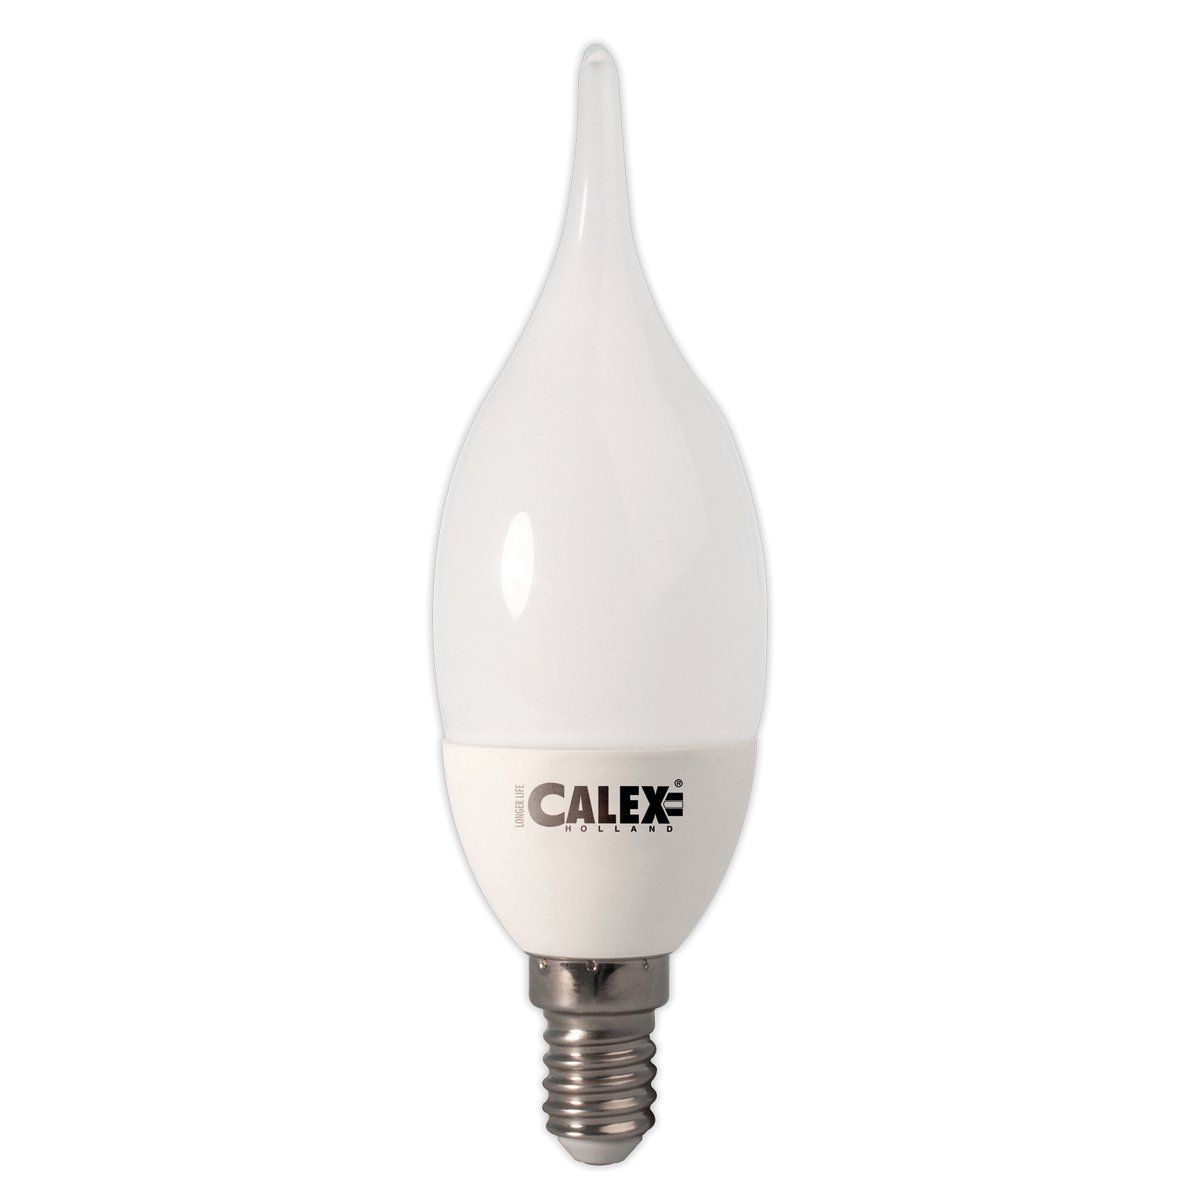 Ampoule LED Dimmable E14 Blanc froid - Ampoule BUT